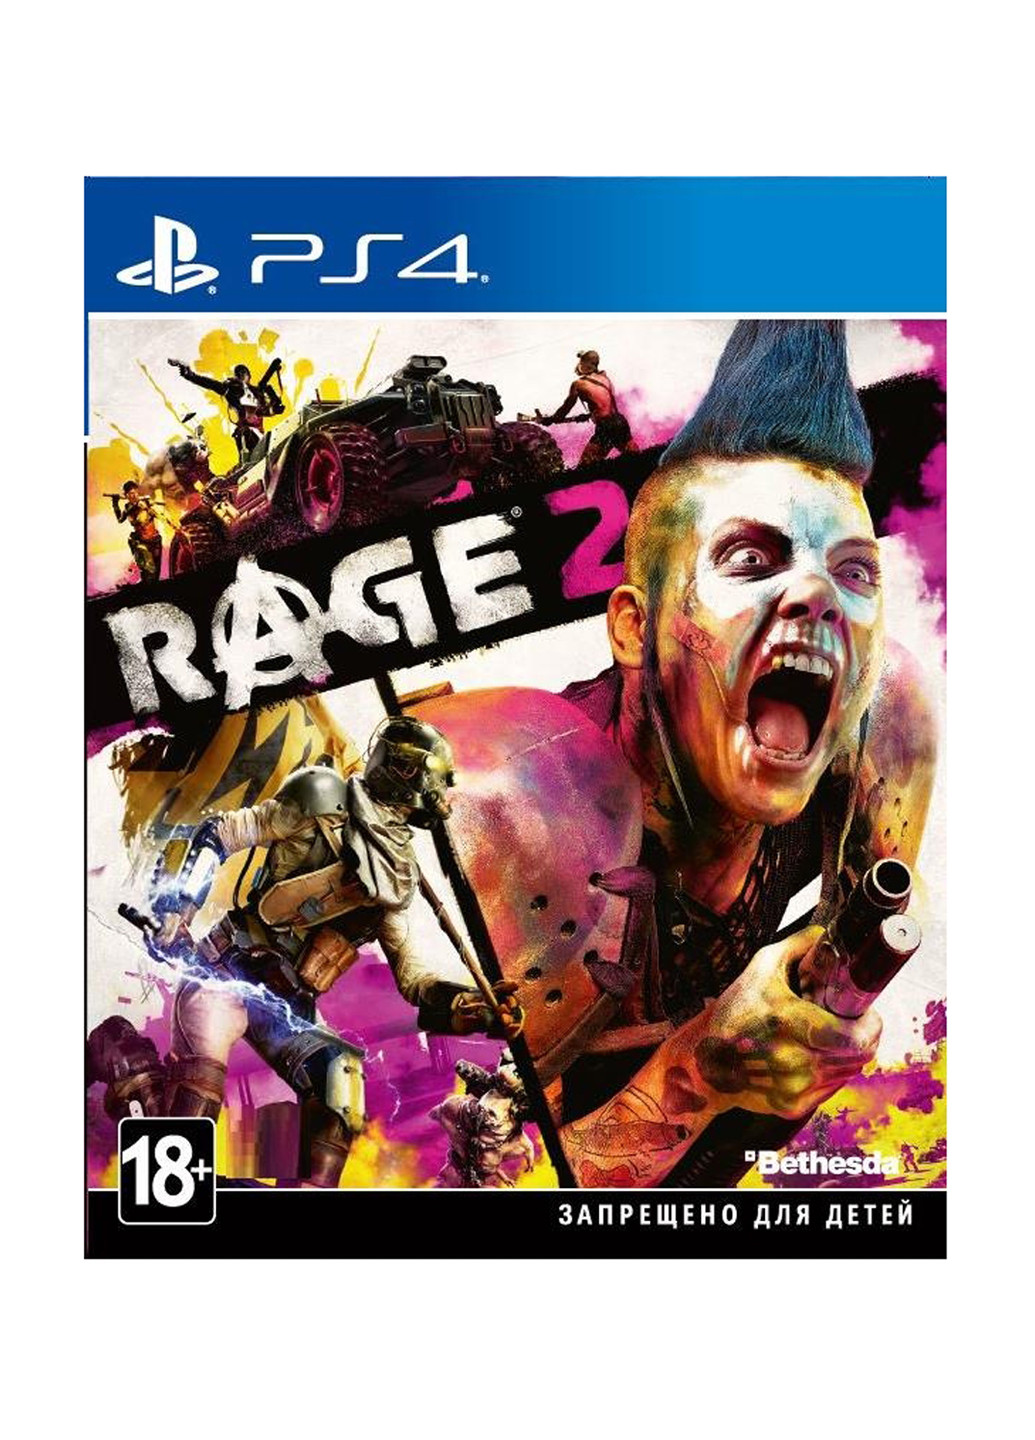 Гра PS4 Rage 2 [Blu-Ray диск] Games Software игра ps4 rage 2 [blu-ray диск] (150134266)